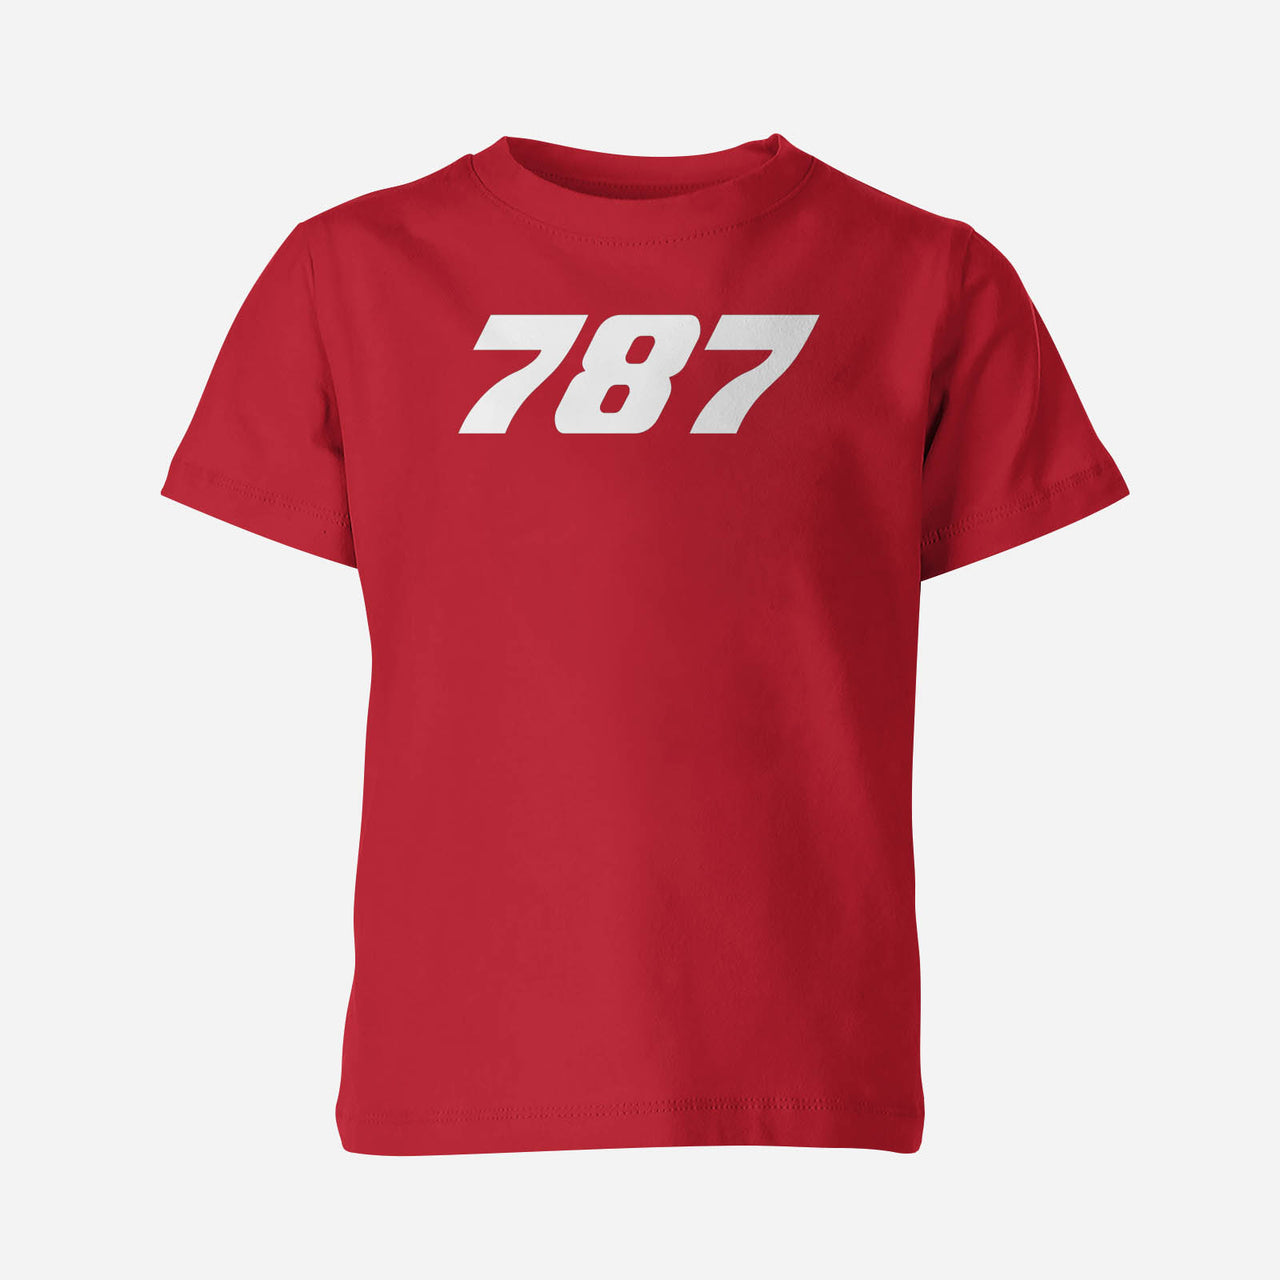 787 Flat Designed Children T-Shirts